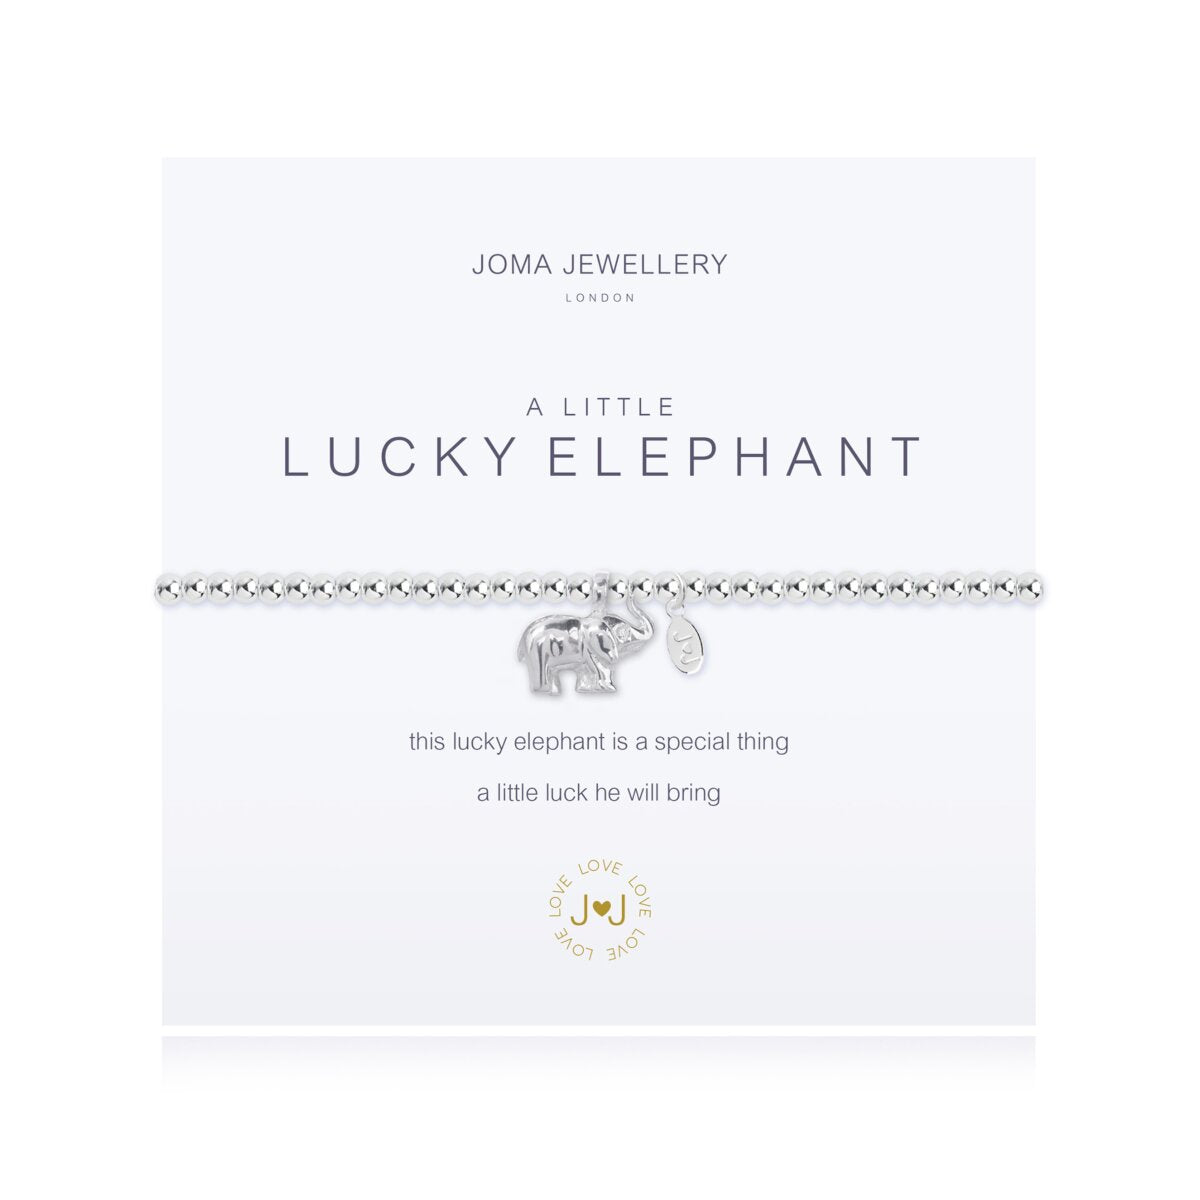 Joma Jewellery 'A Little' Lucky Elephant